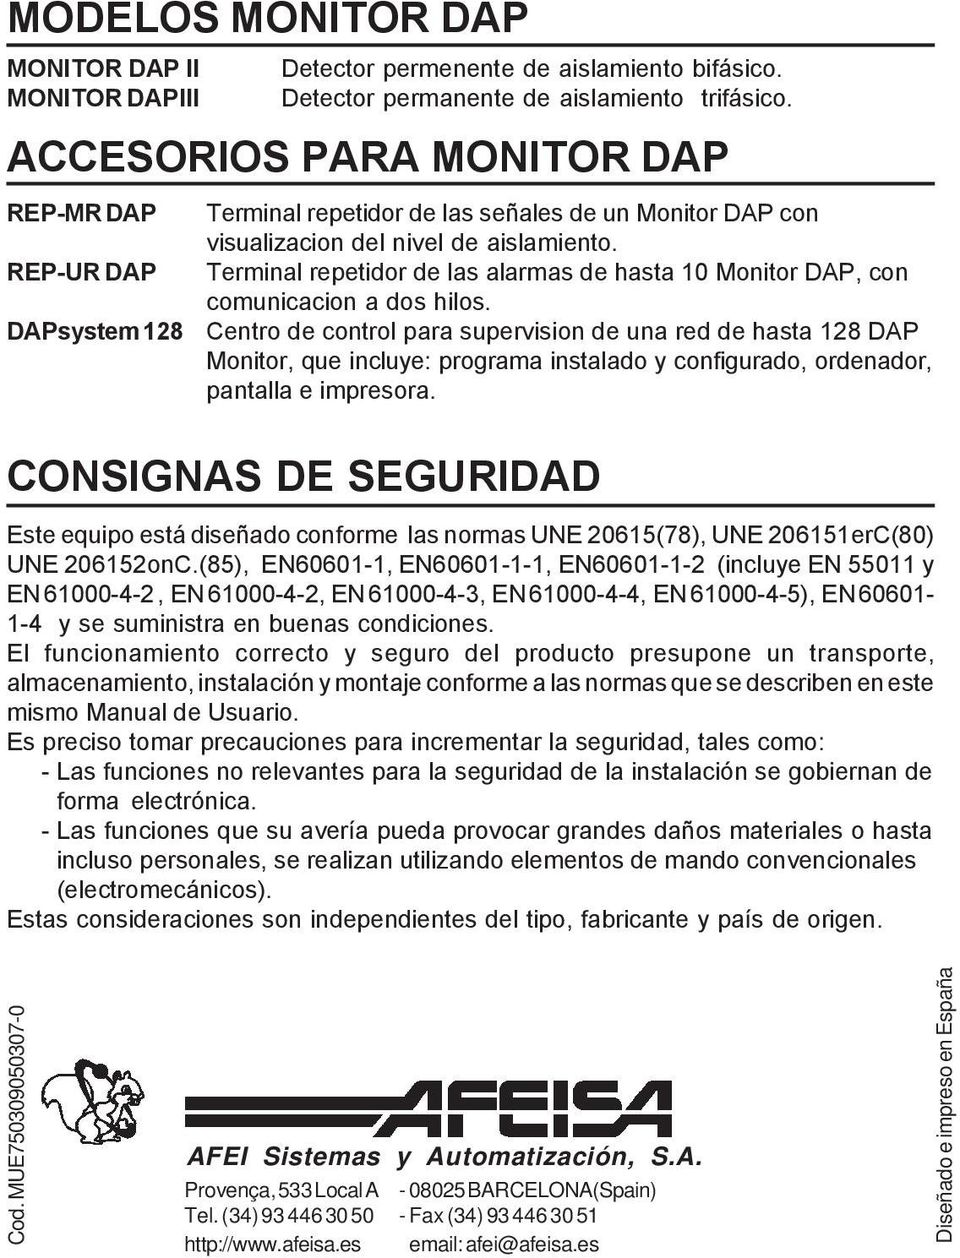 REP-UR DAP Terminal repetidor de las alarmas de hasta 10 Monitor DAP, con comunicacion a dos hilos.